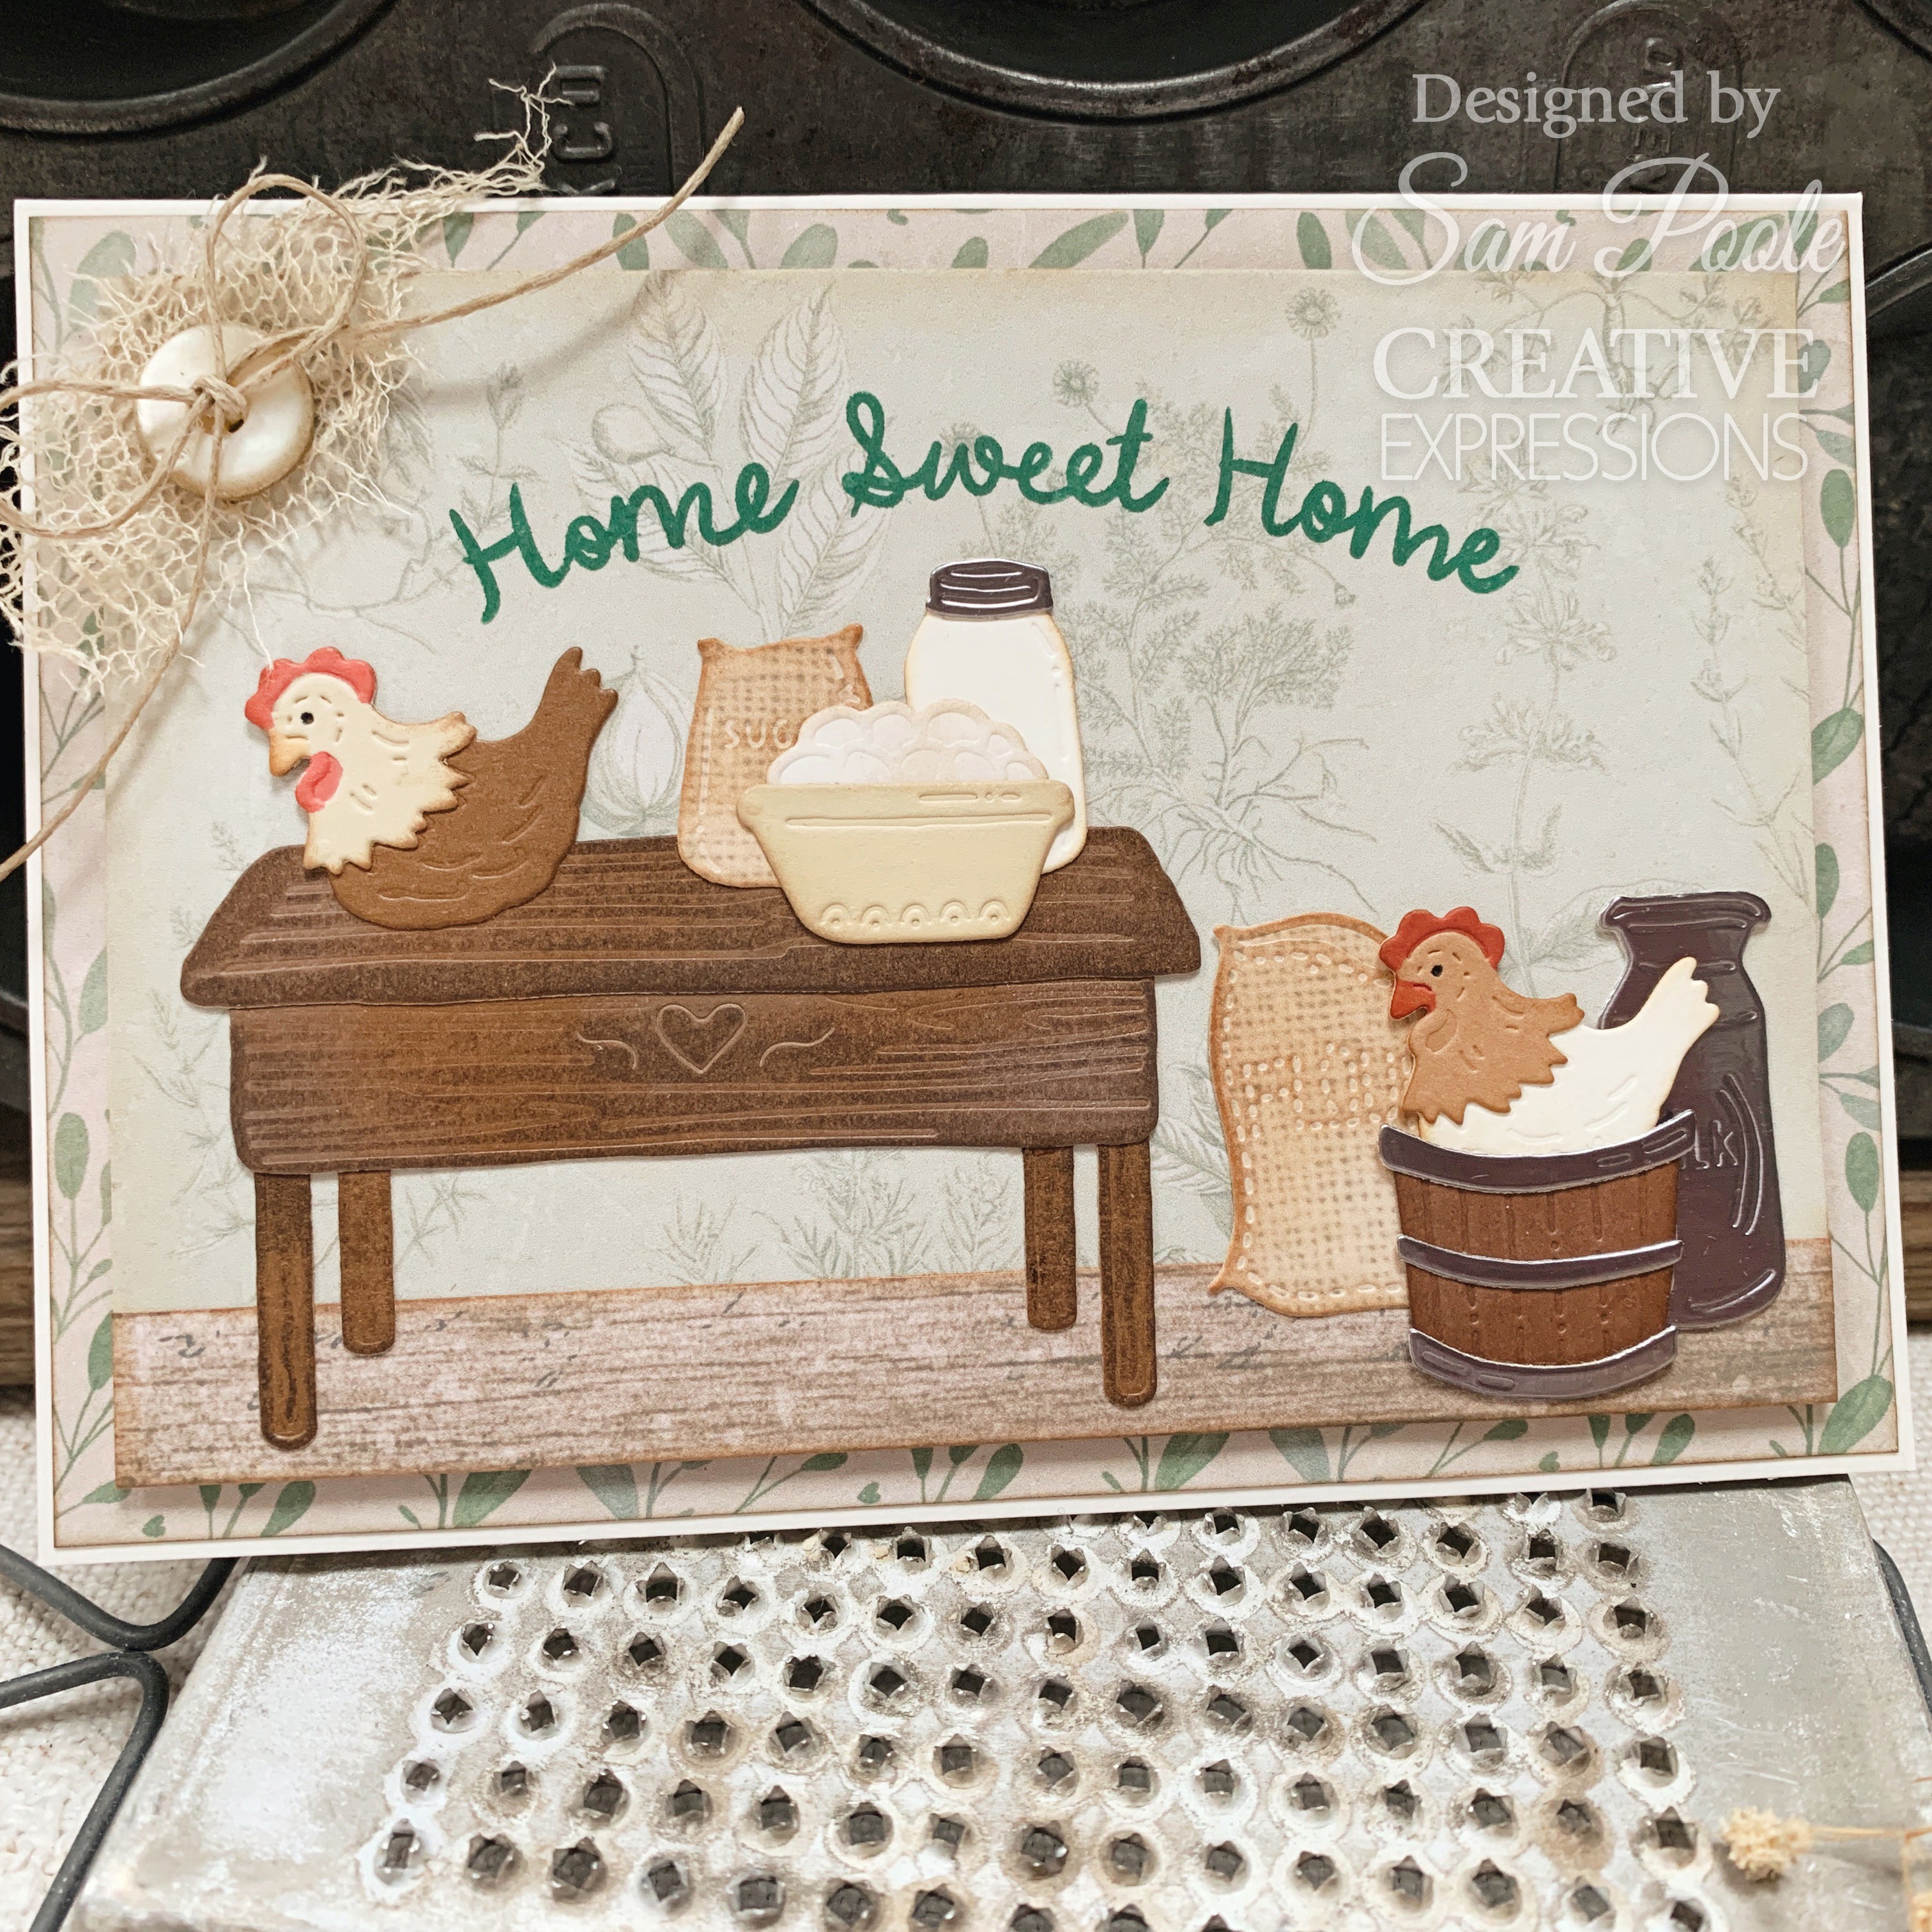 Creative Expressions Sam Poole Rustic Homestead Kitchen Shelf Accessories Craft Die